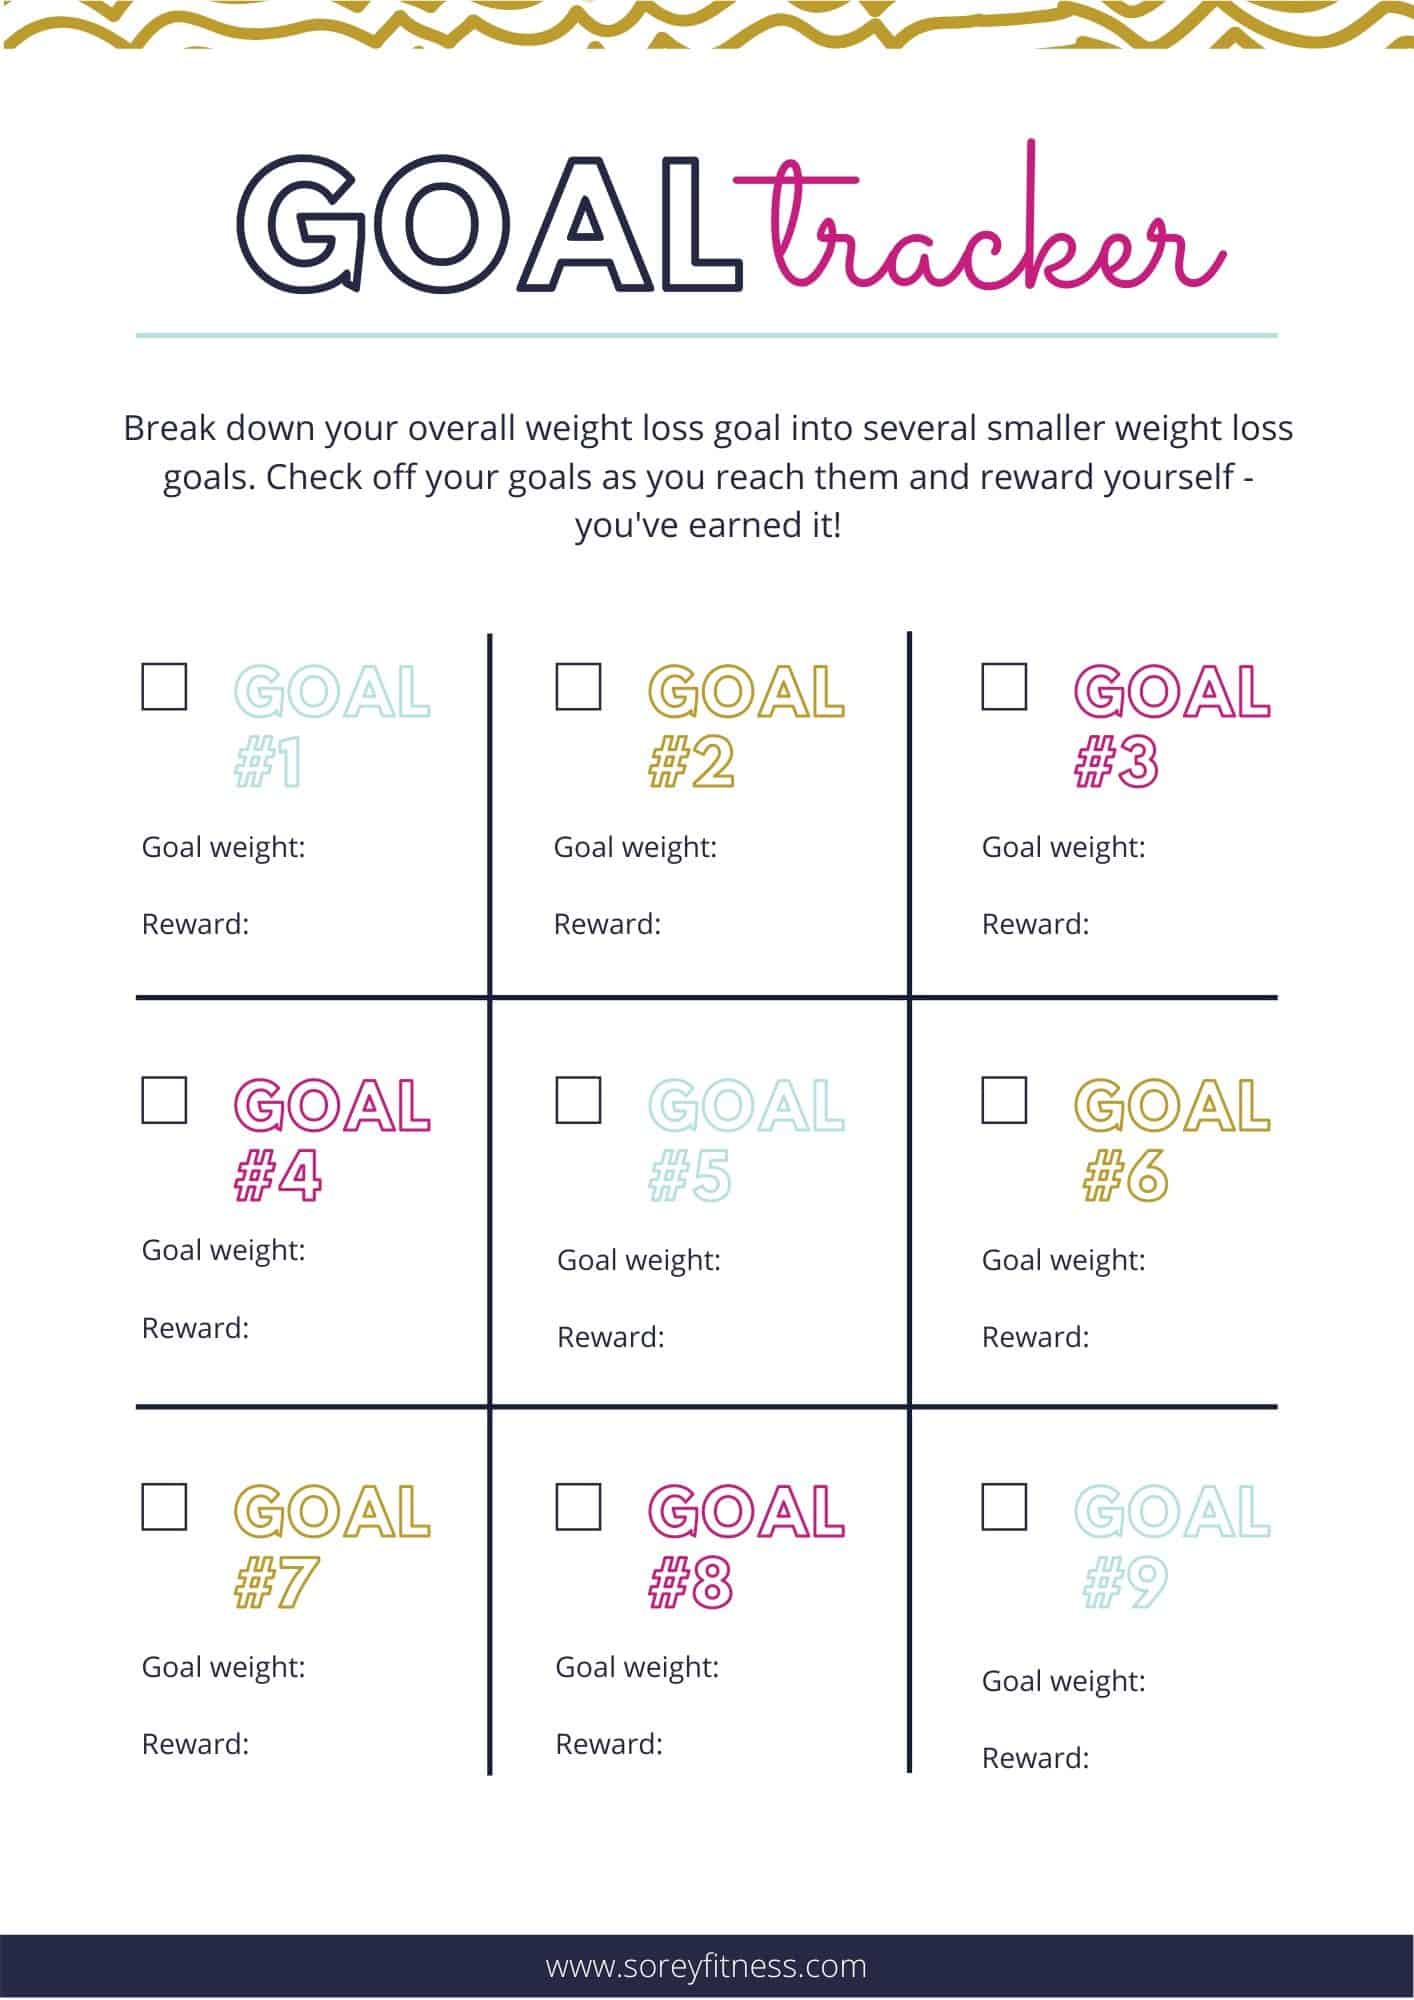 weight loss and rewards goal tracker sheet